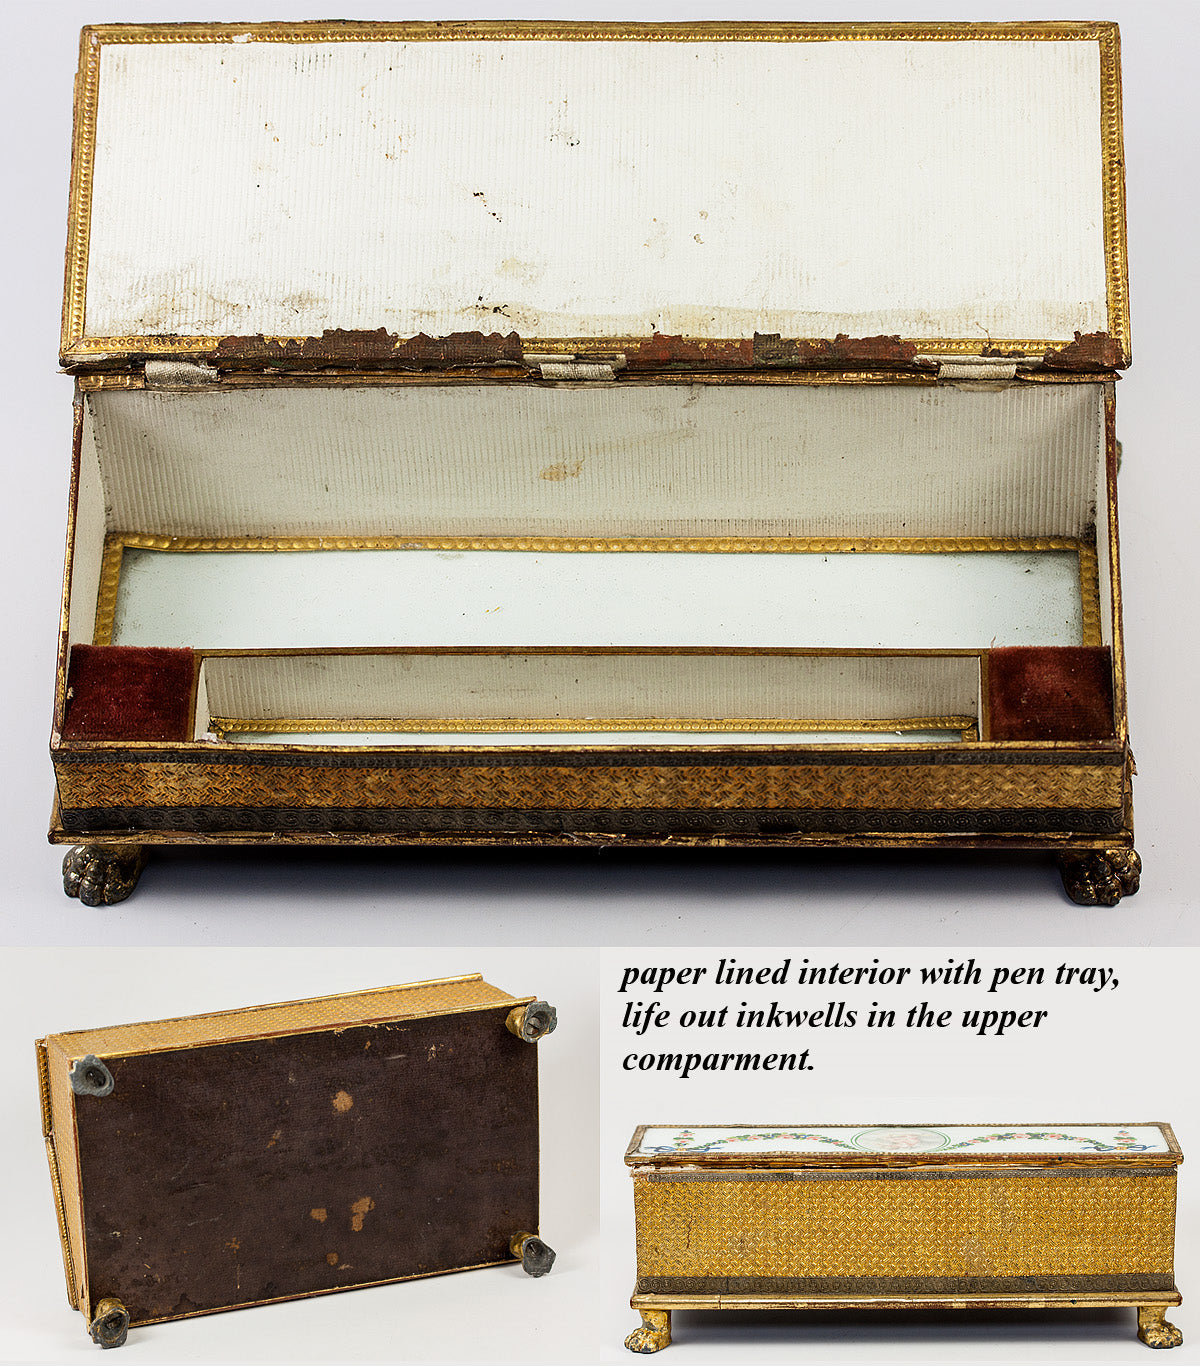 RARE Antique c.1700s French Eglomise Writer's Box, Double Inkwell, Chocolatier's Box